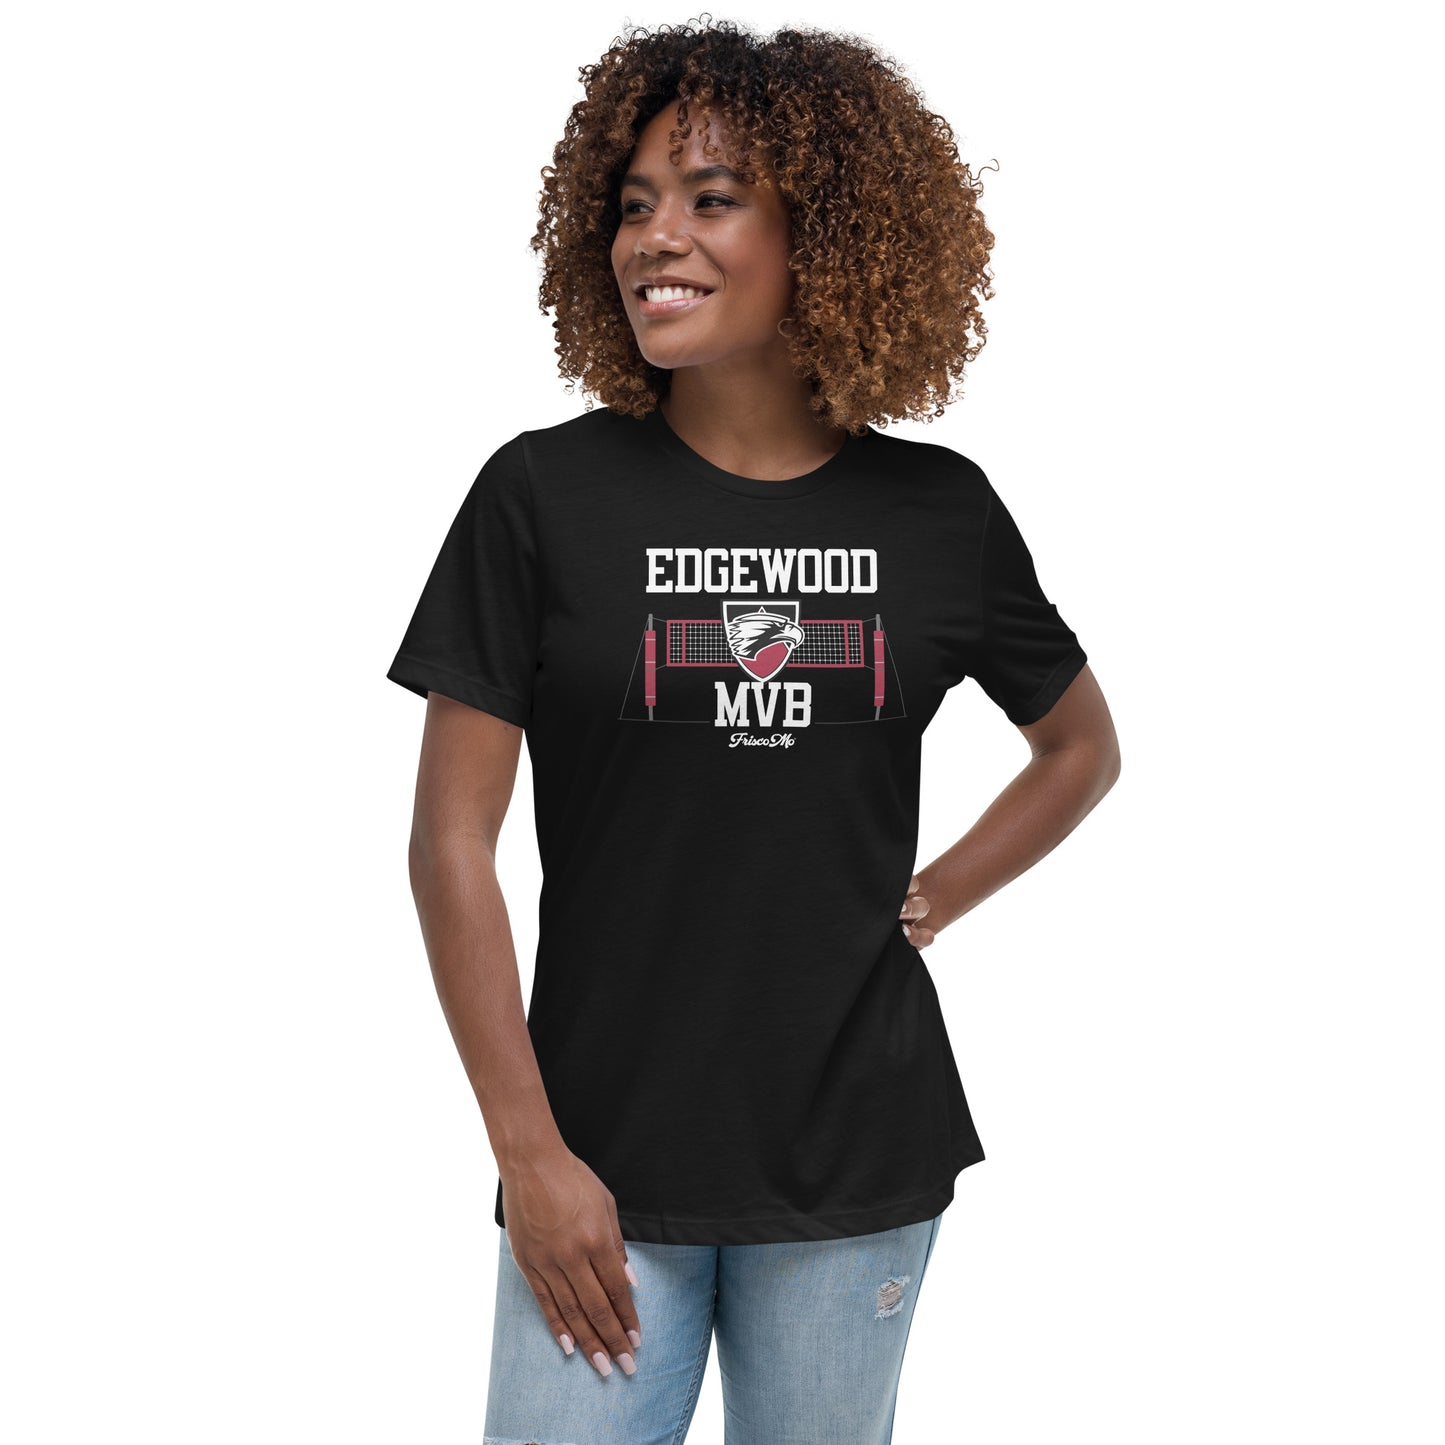 Edgewood MVB Women's Tee